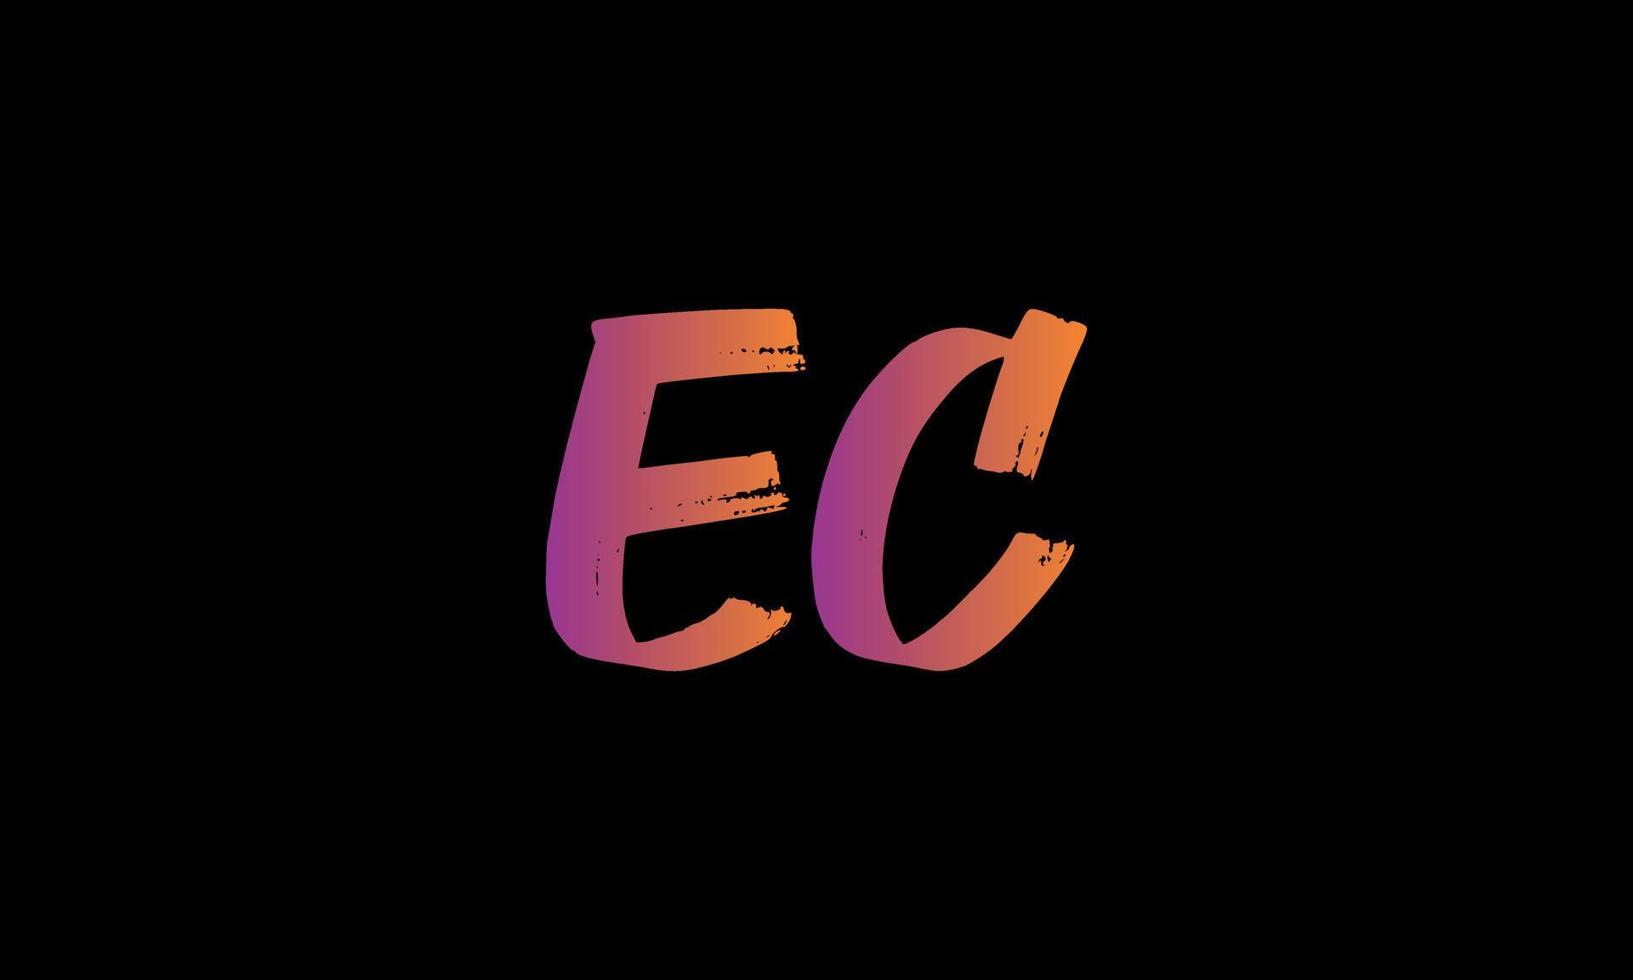 Anfangsbuchstabe ec-Logo. ec-Bürstenbuchstabe-Logo-Design kostenlose Vektordatei. vektor